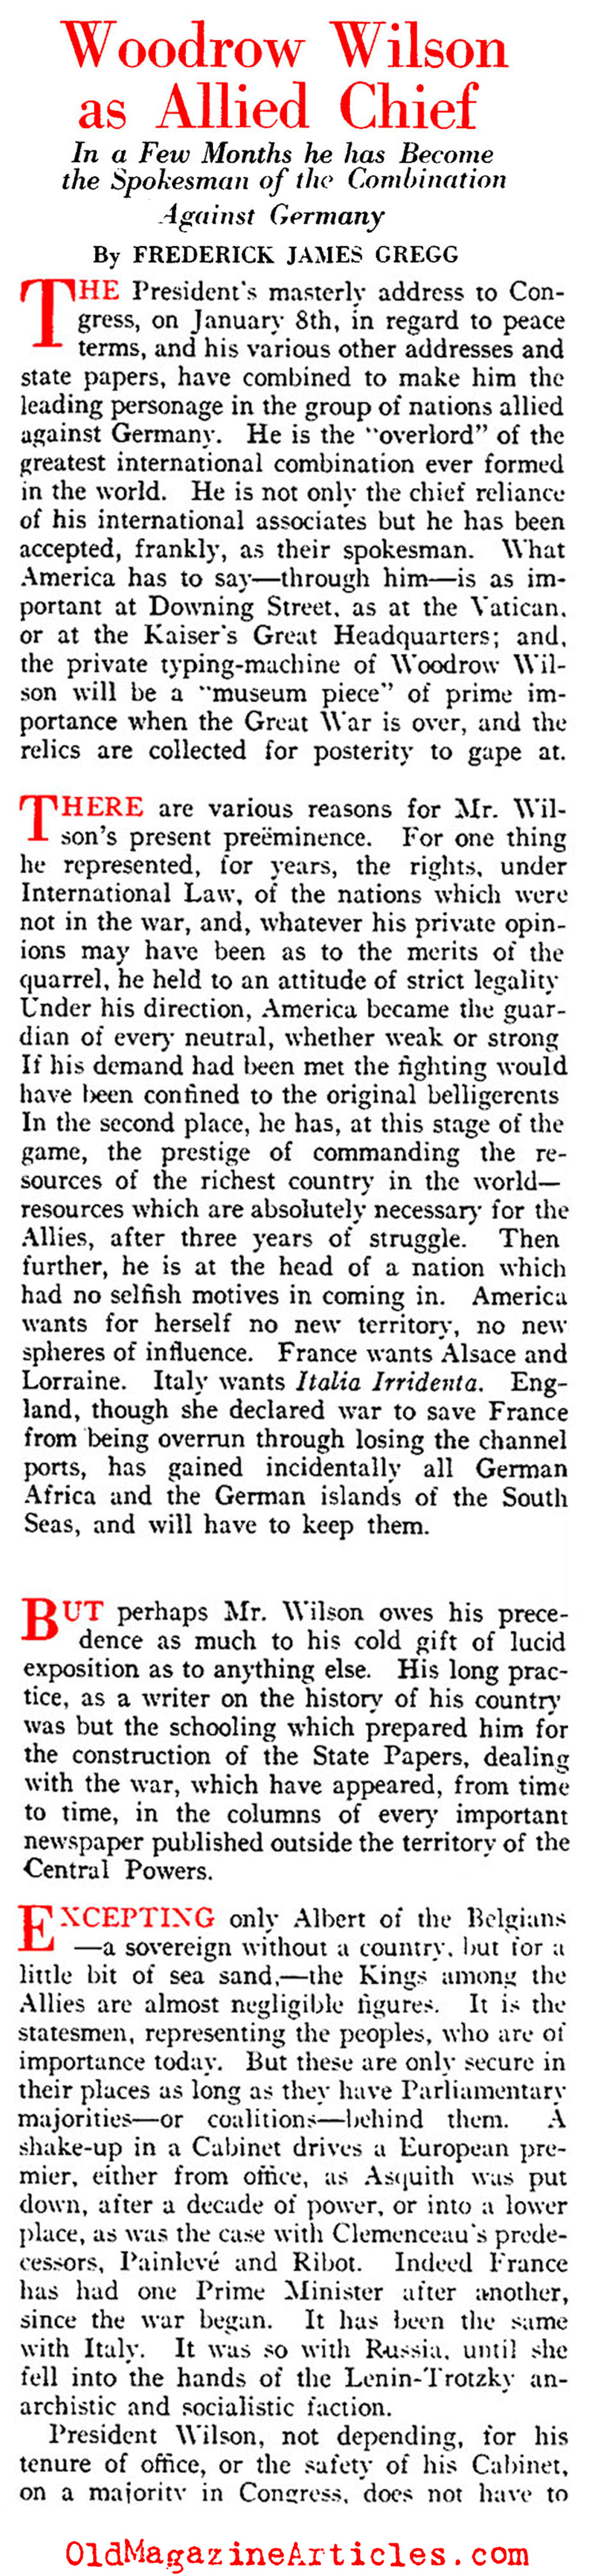 The Wartime Leadership of Woodrow Wilson (Vanity Fair Magazine, 1918)